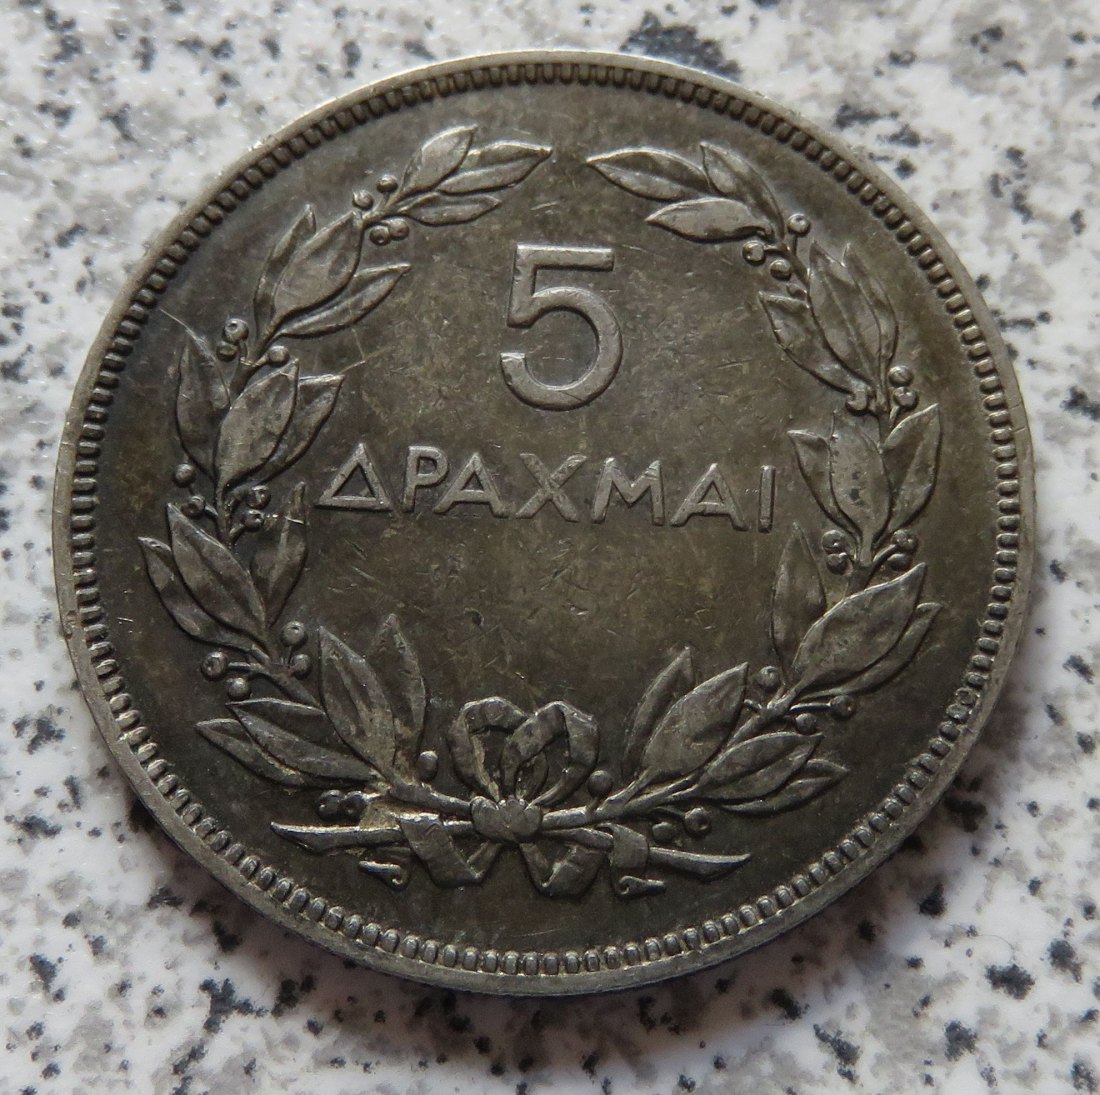  Griechenland 5 Drachmai 1930   